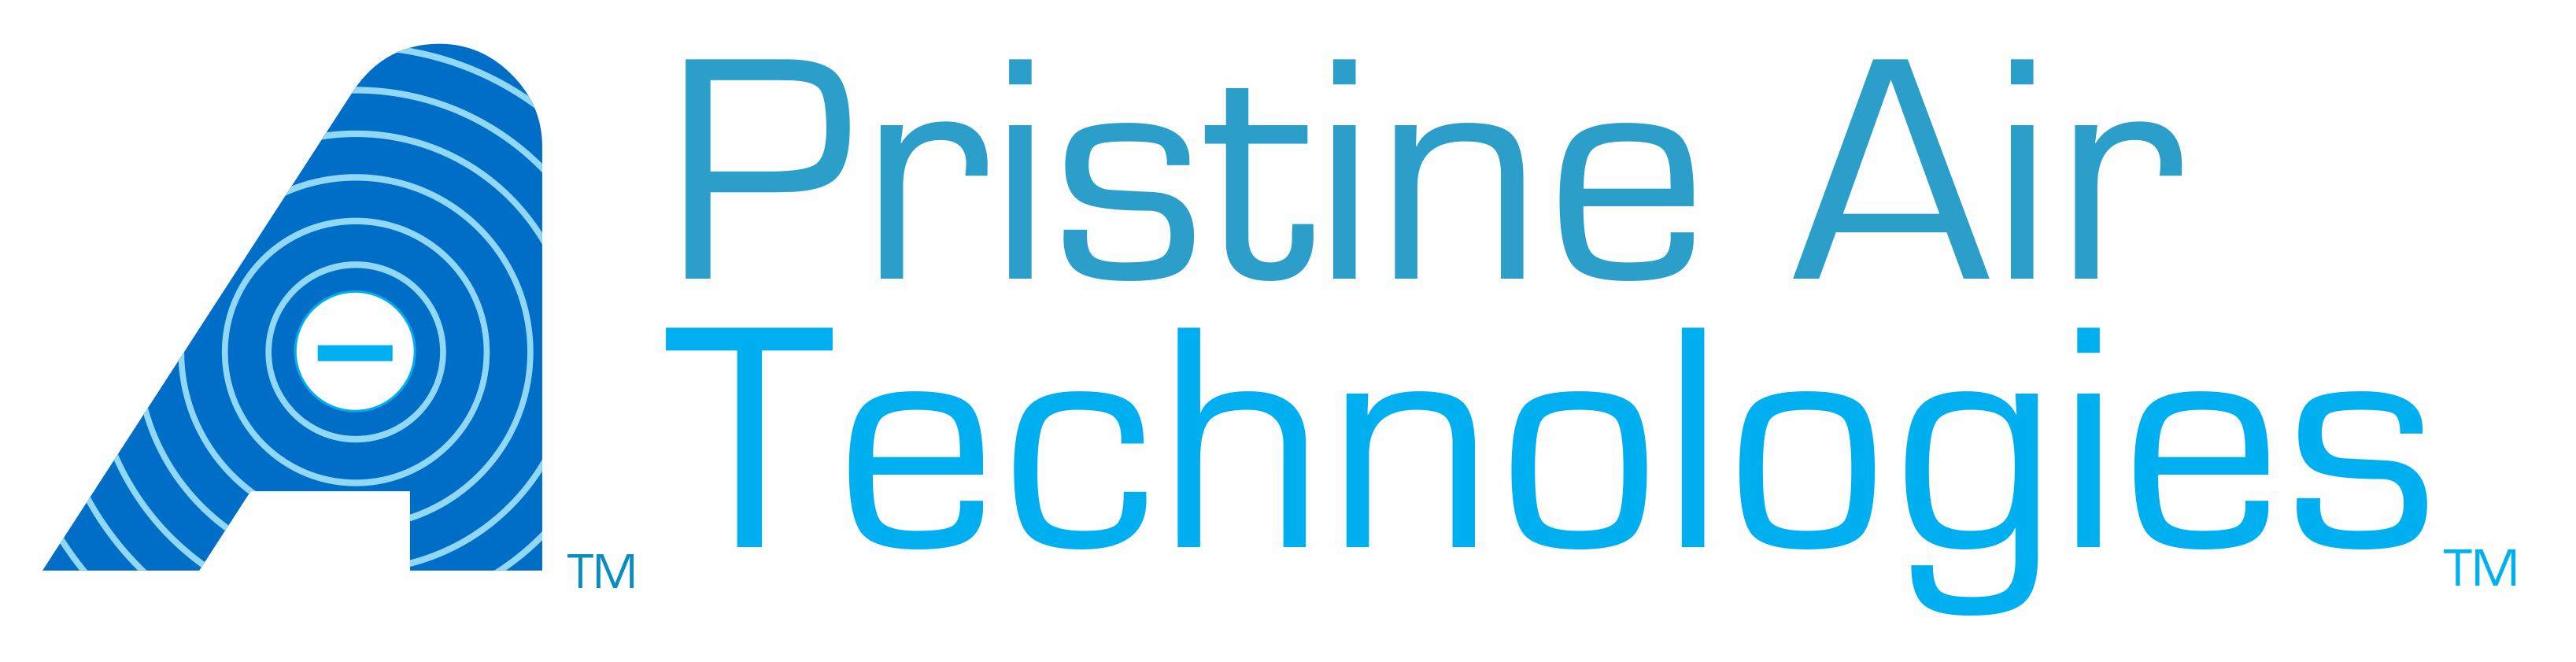 Pristine Air Technologies